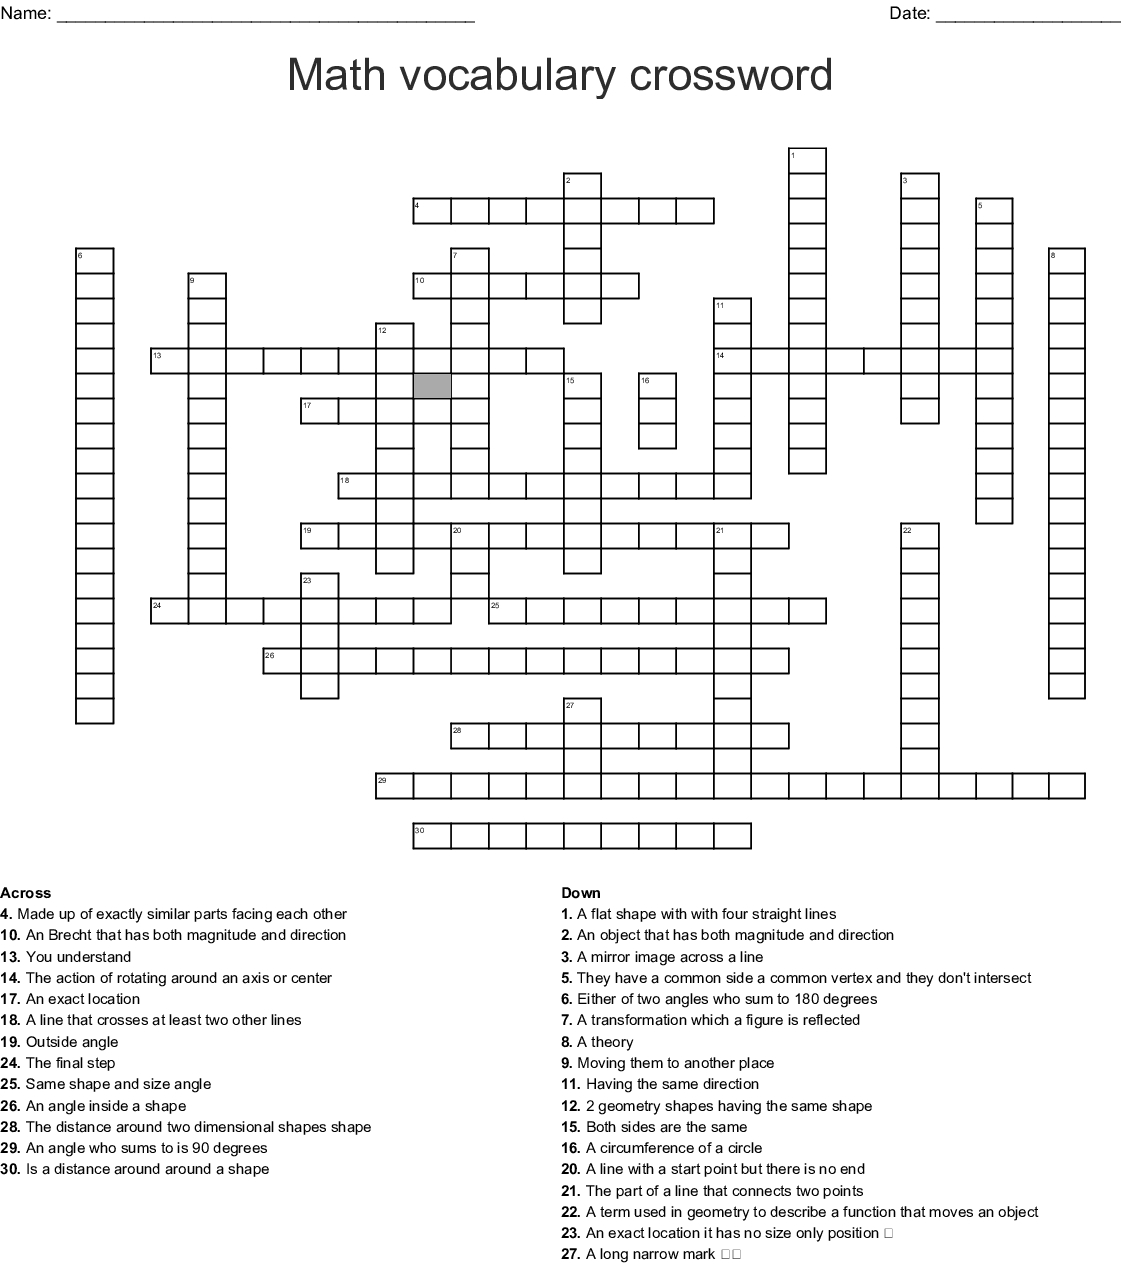 Free Printable Math Vocabulary Crossword Puzzles